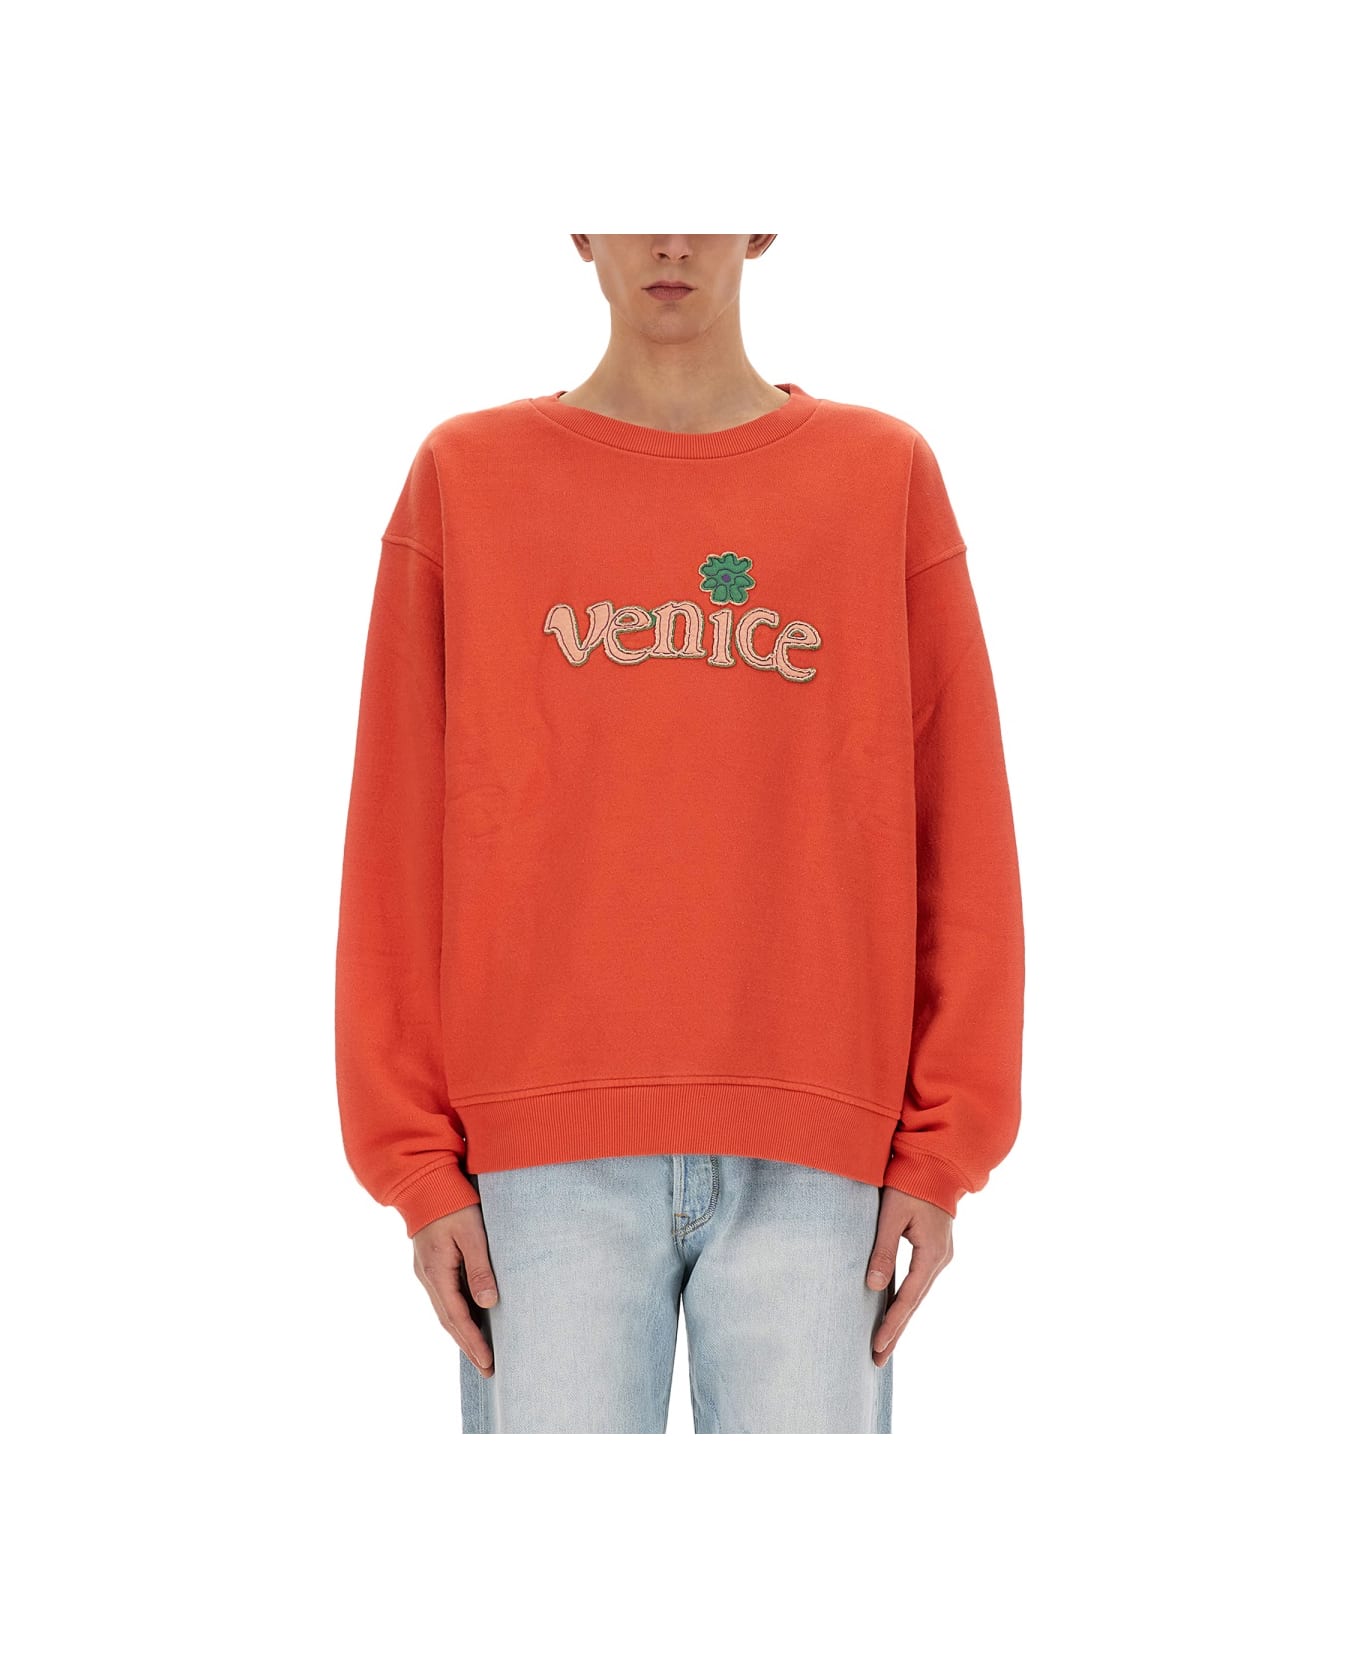 ERL "venice" Sweatshirt - RED